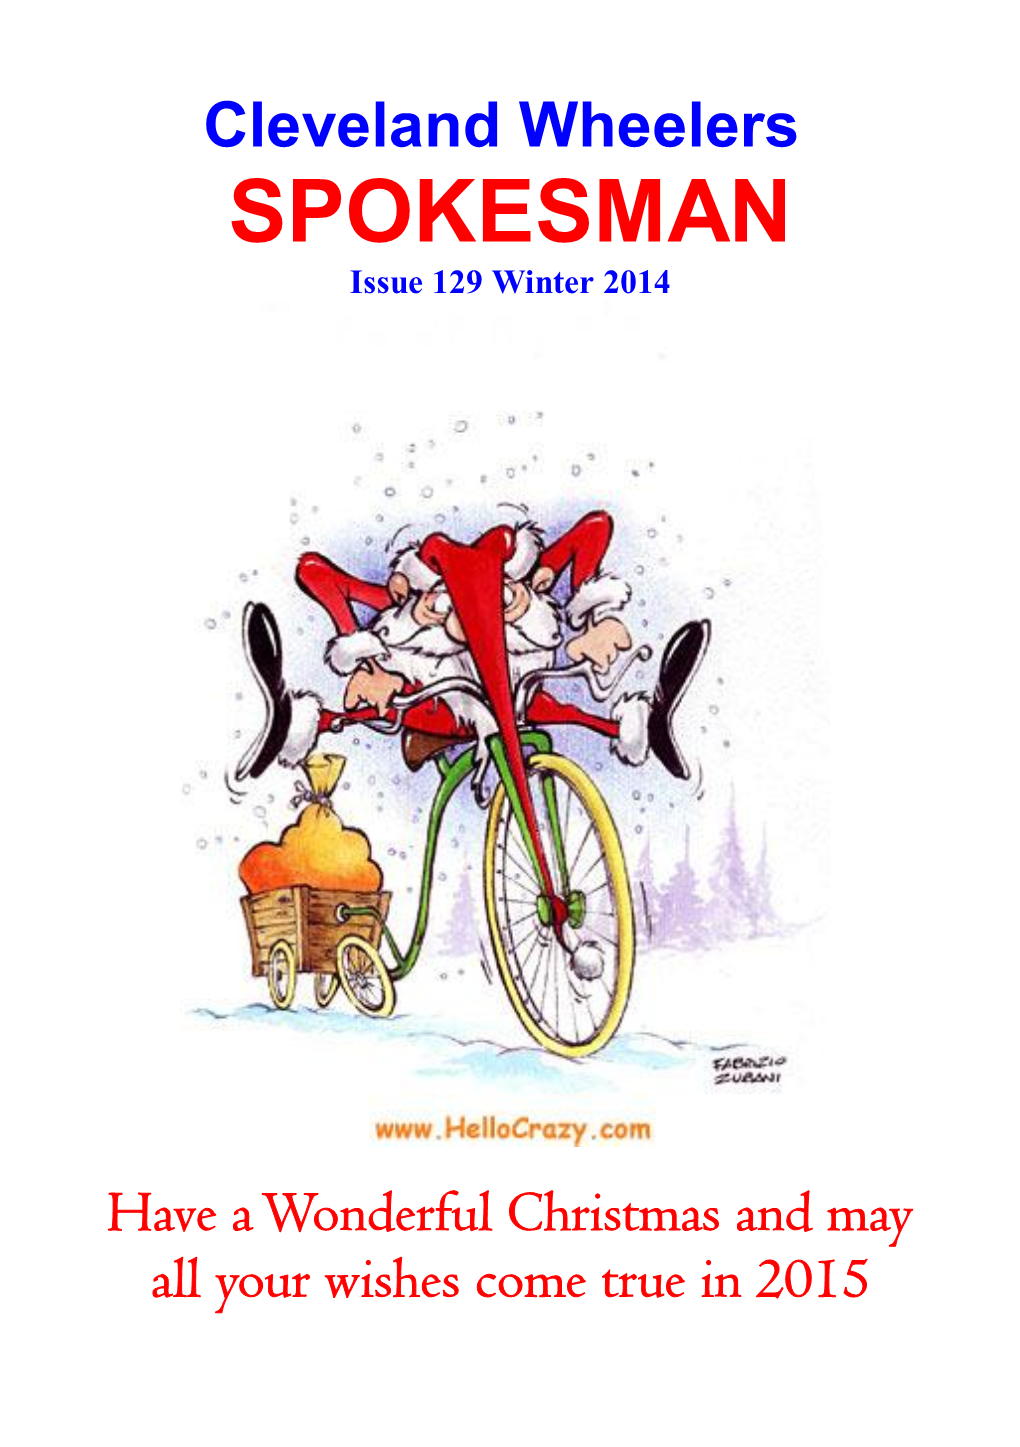 SPOKESMAN Issue 129 Winter 2014